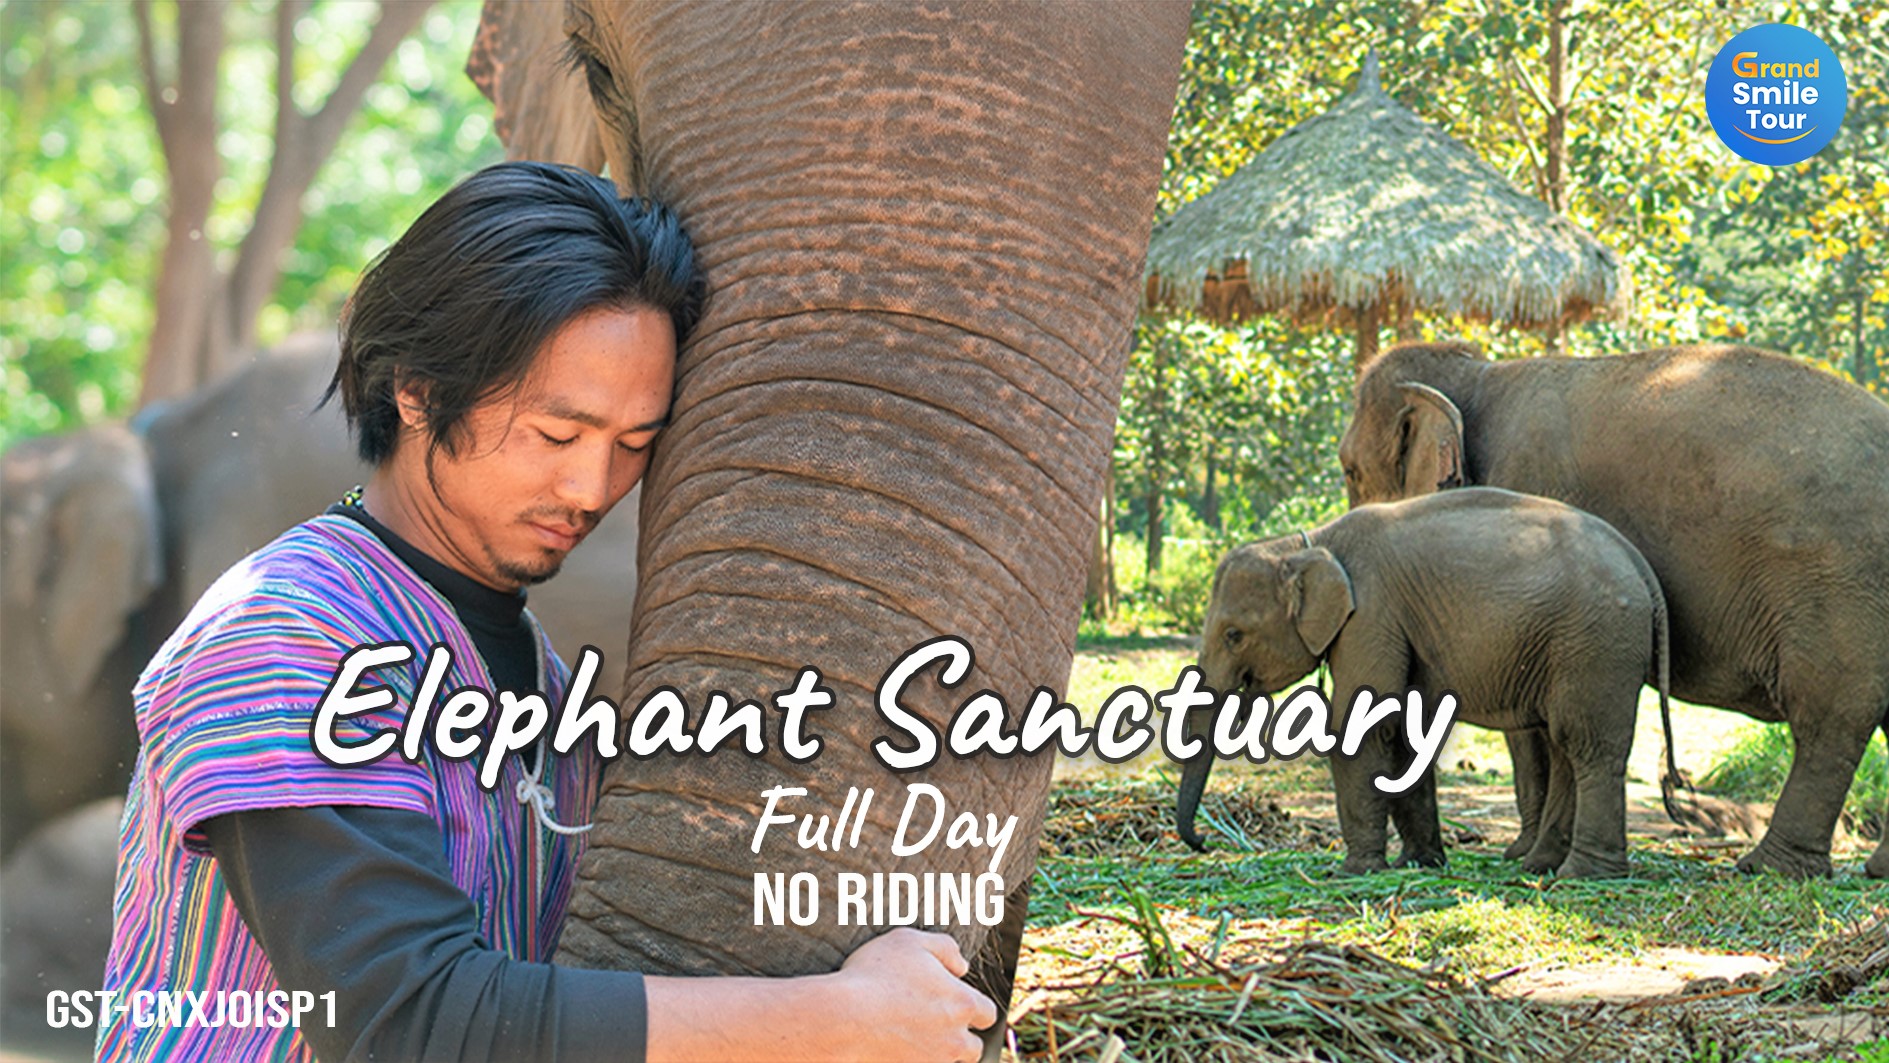 GST-CNXJOISP1 Full Day Elephant Sanctuary